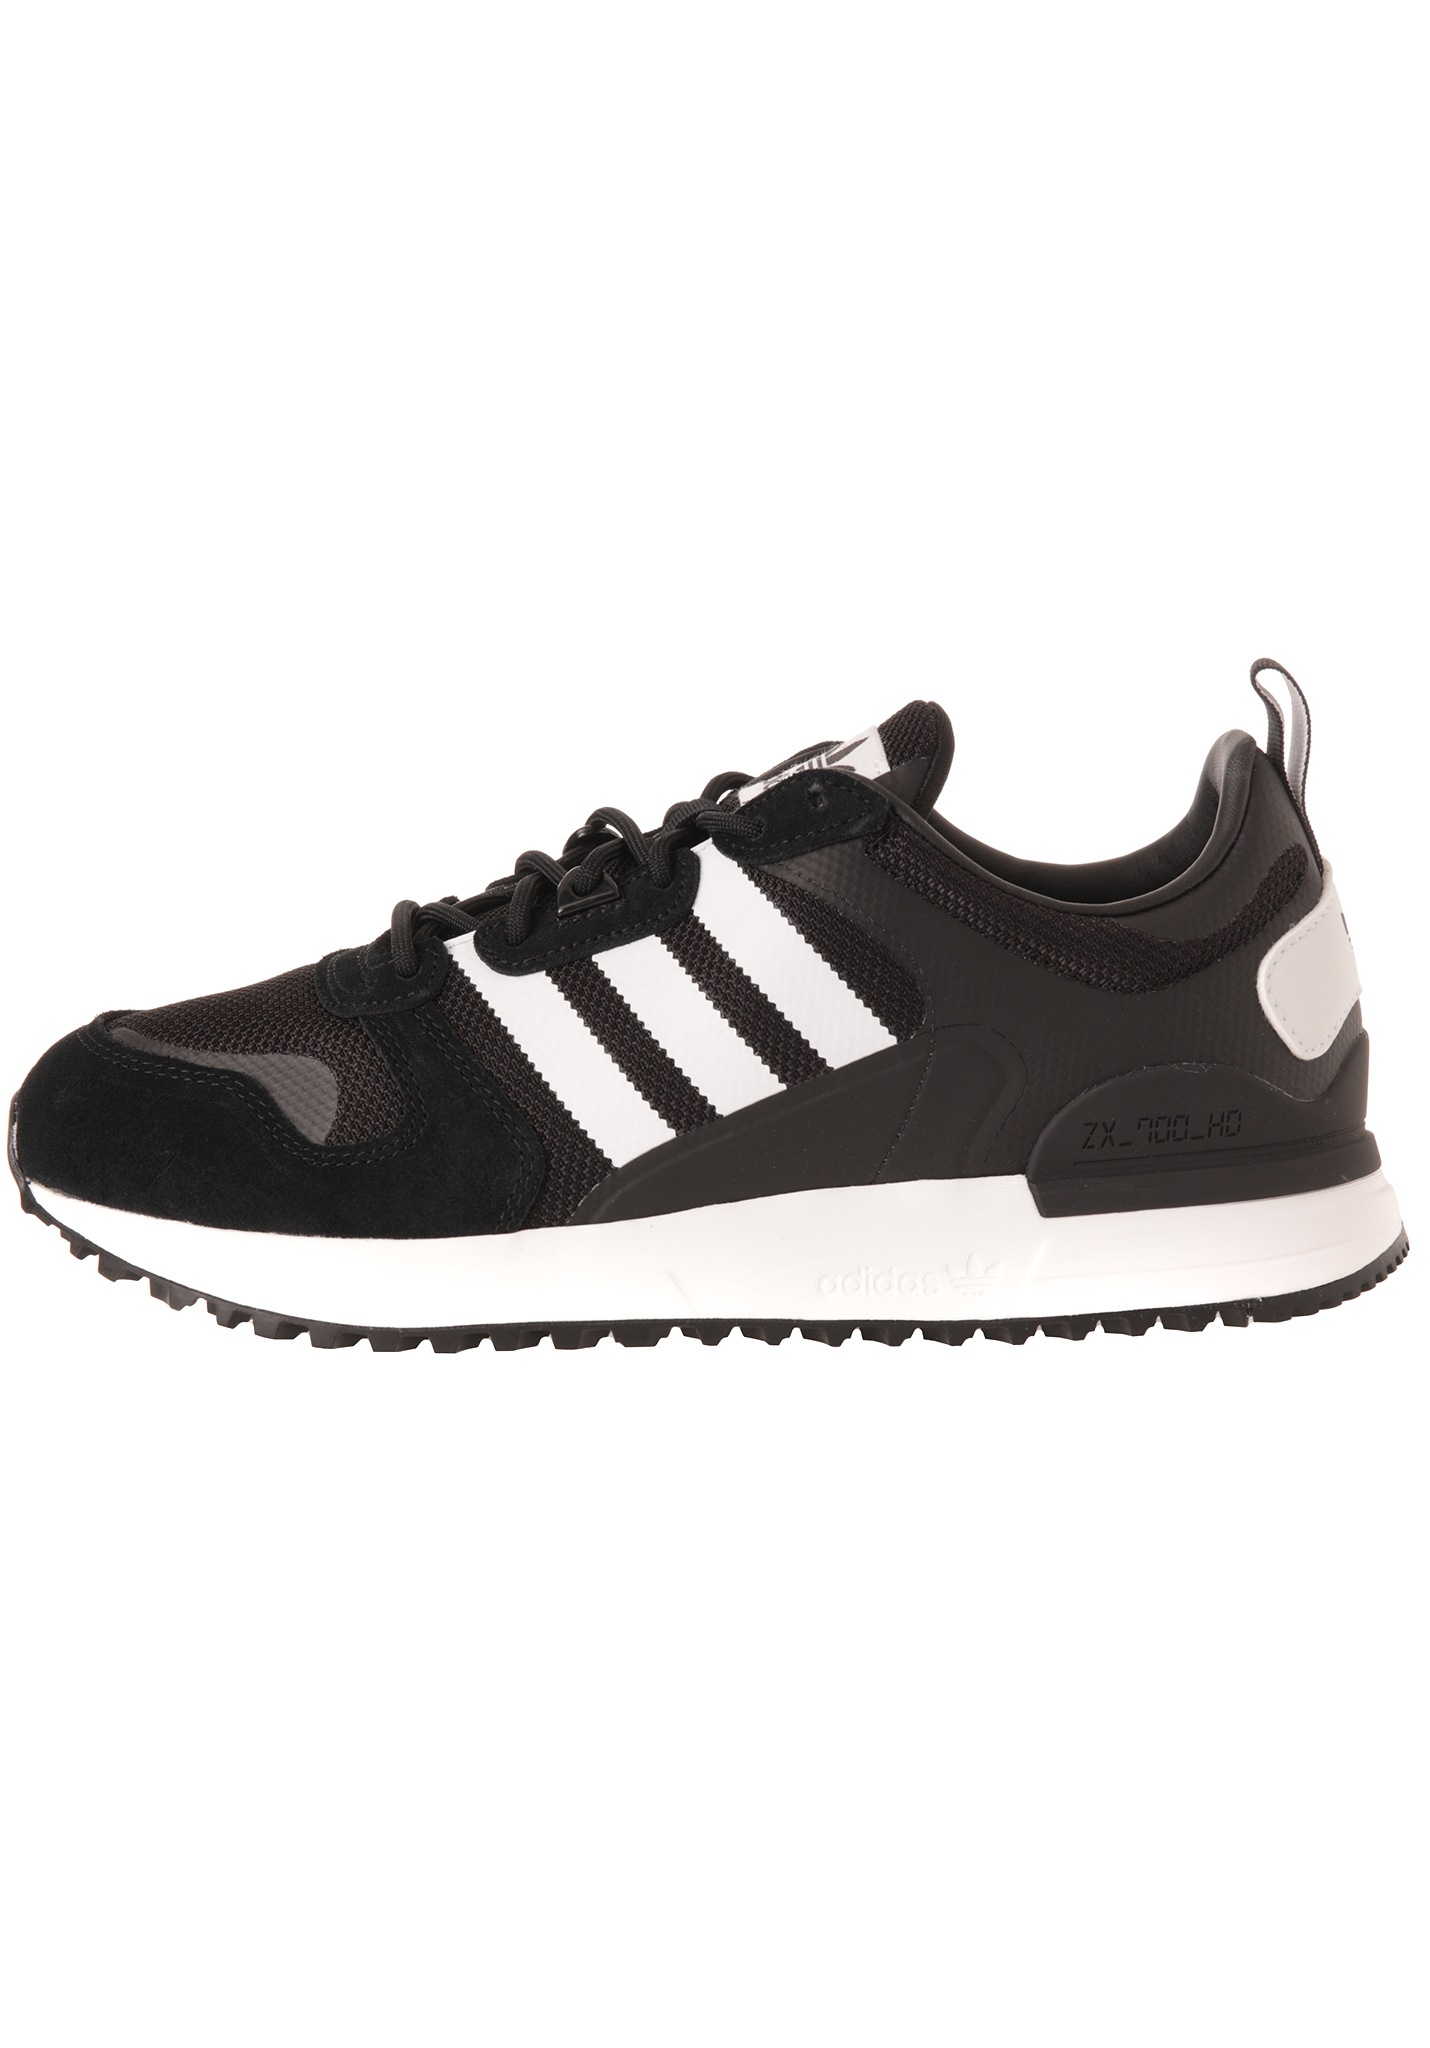 Adidas Originals Zx 700 Hd Sneaker black 47 1/3